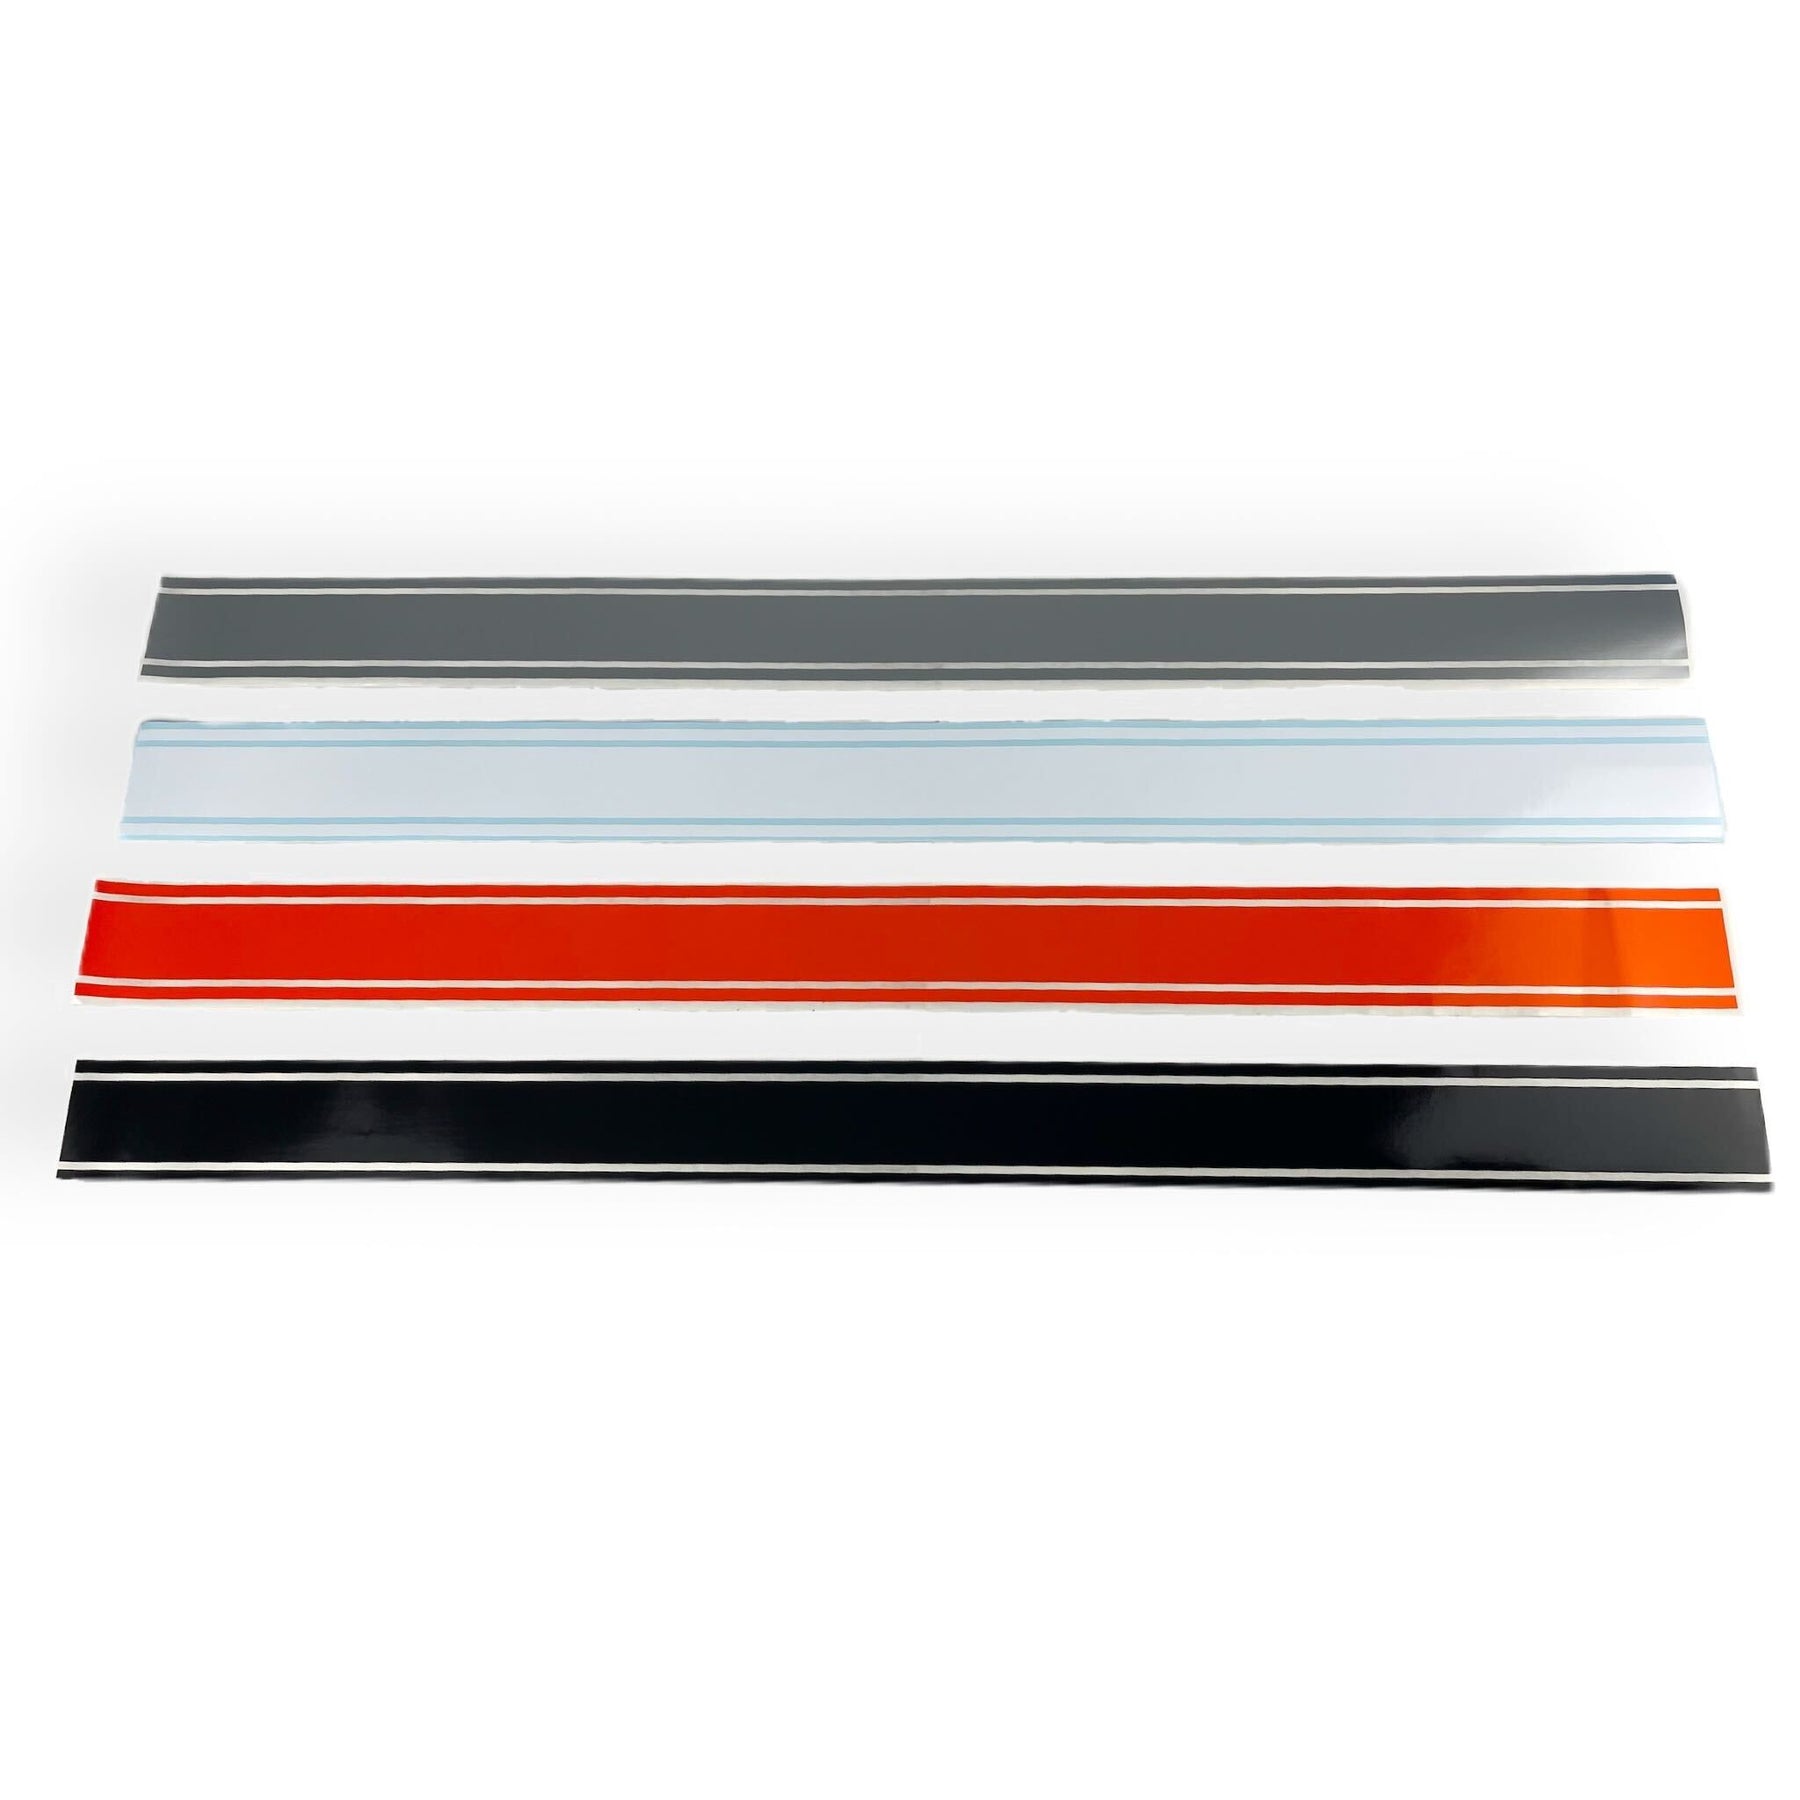 Scomadi GP Side Panel Stripes - Orange